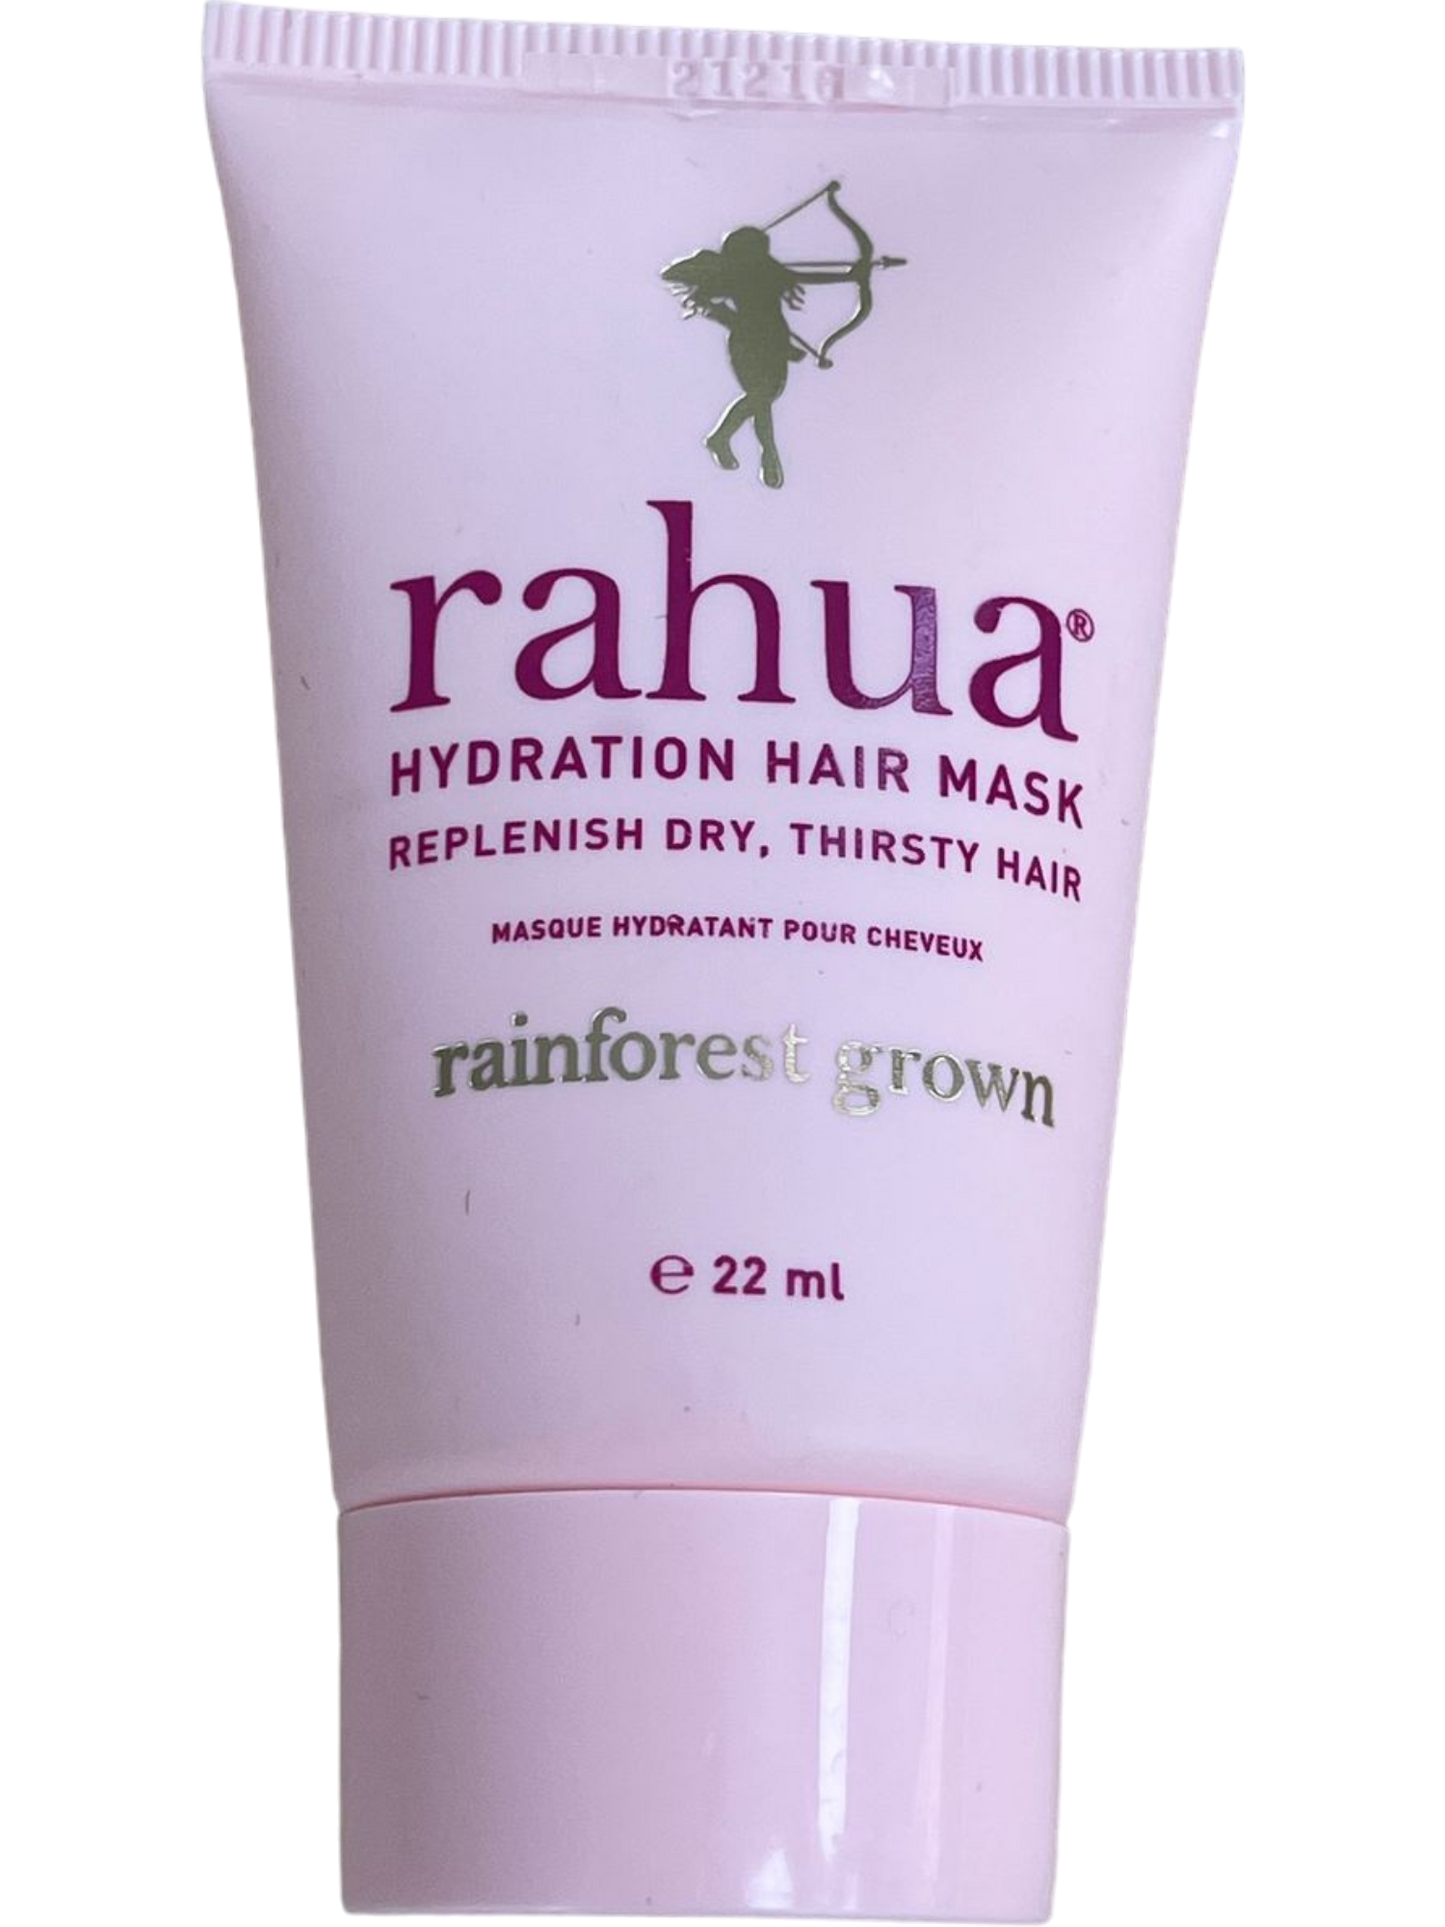 Rahua Hydration Hair Mask Mini 22ml